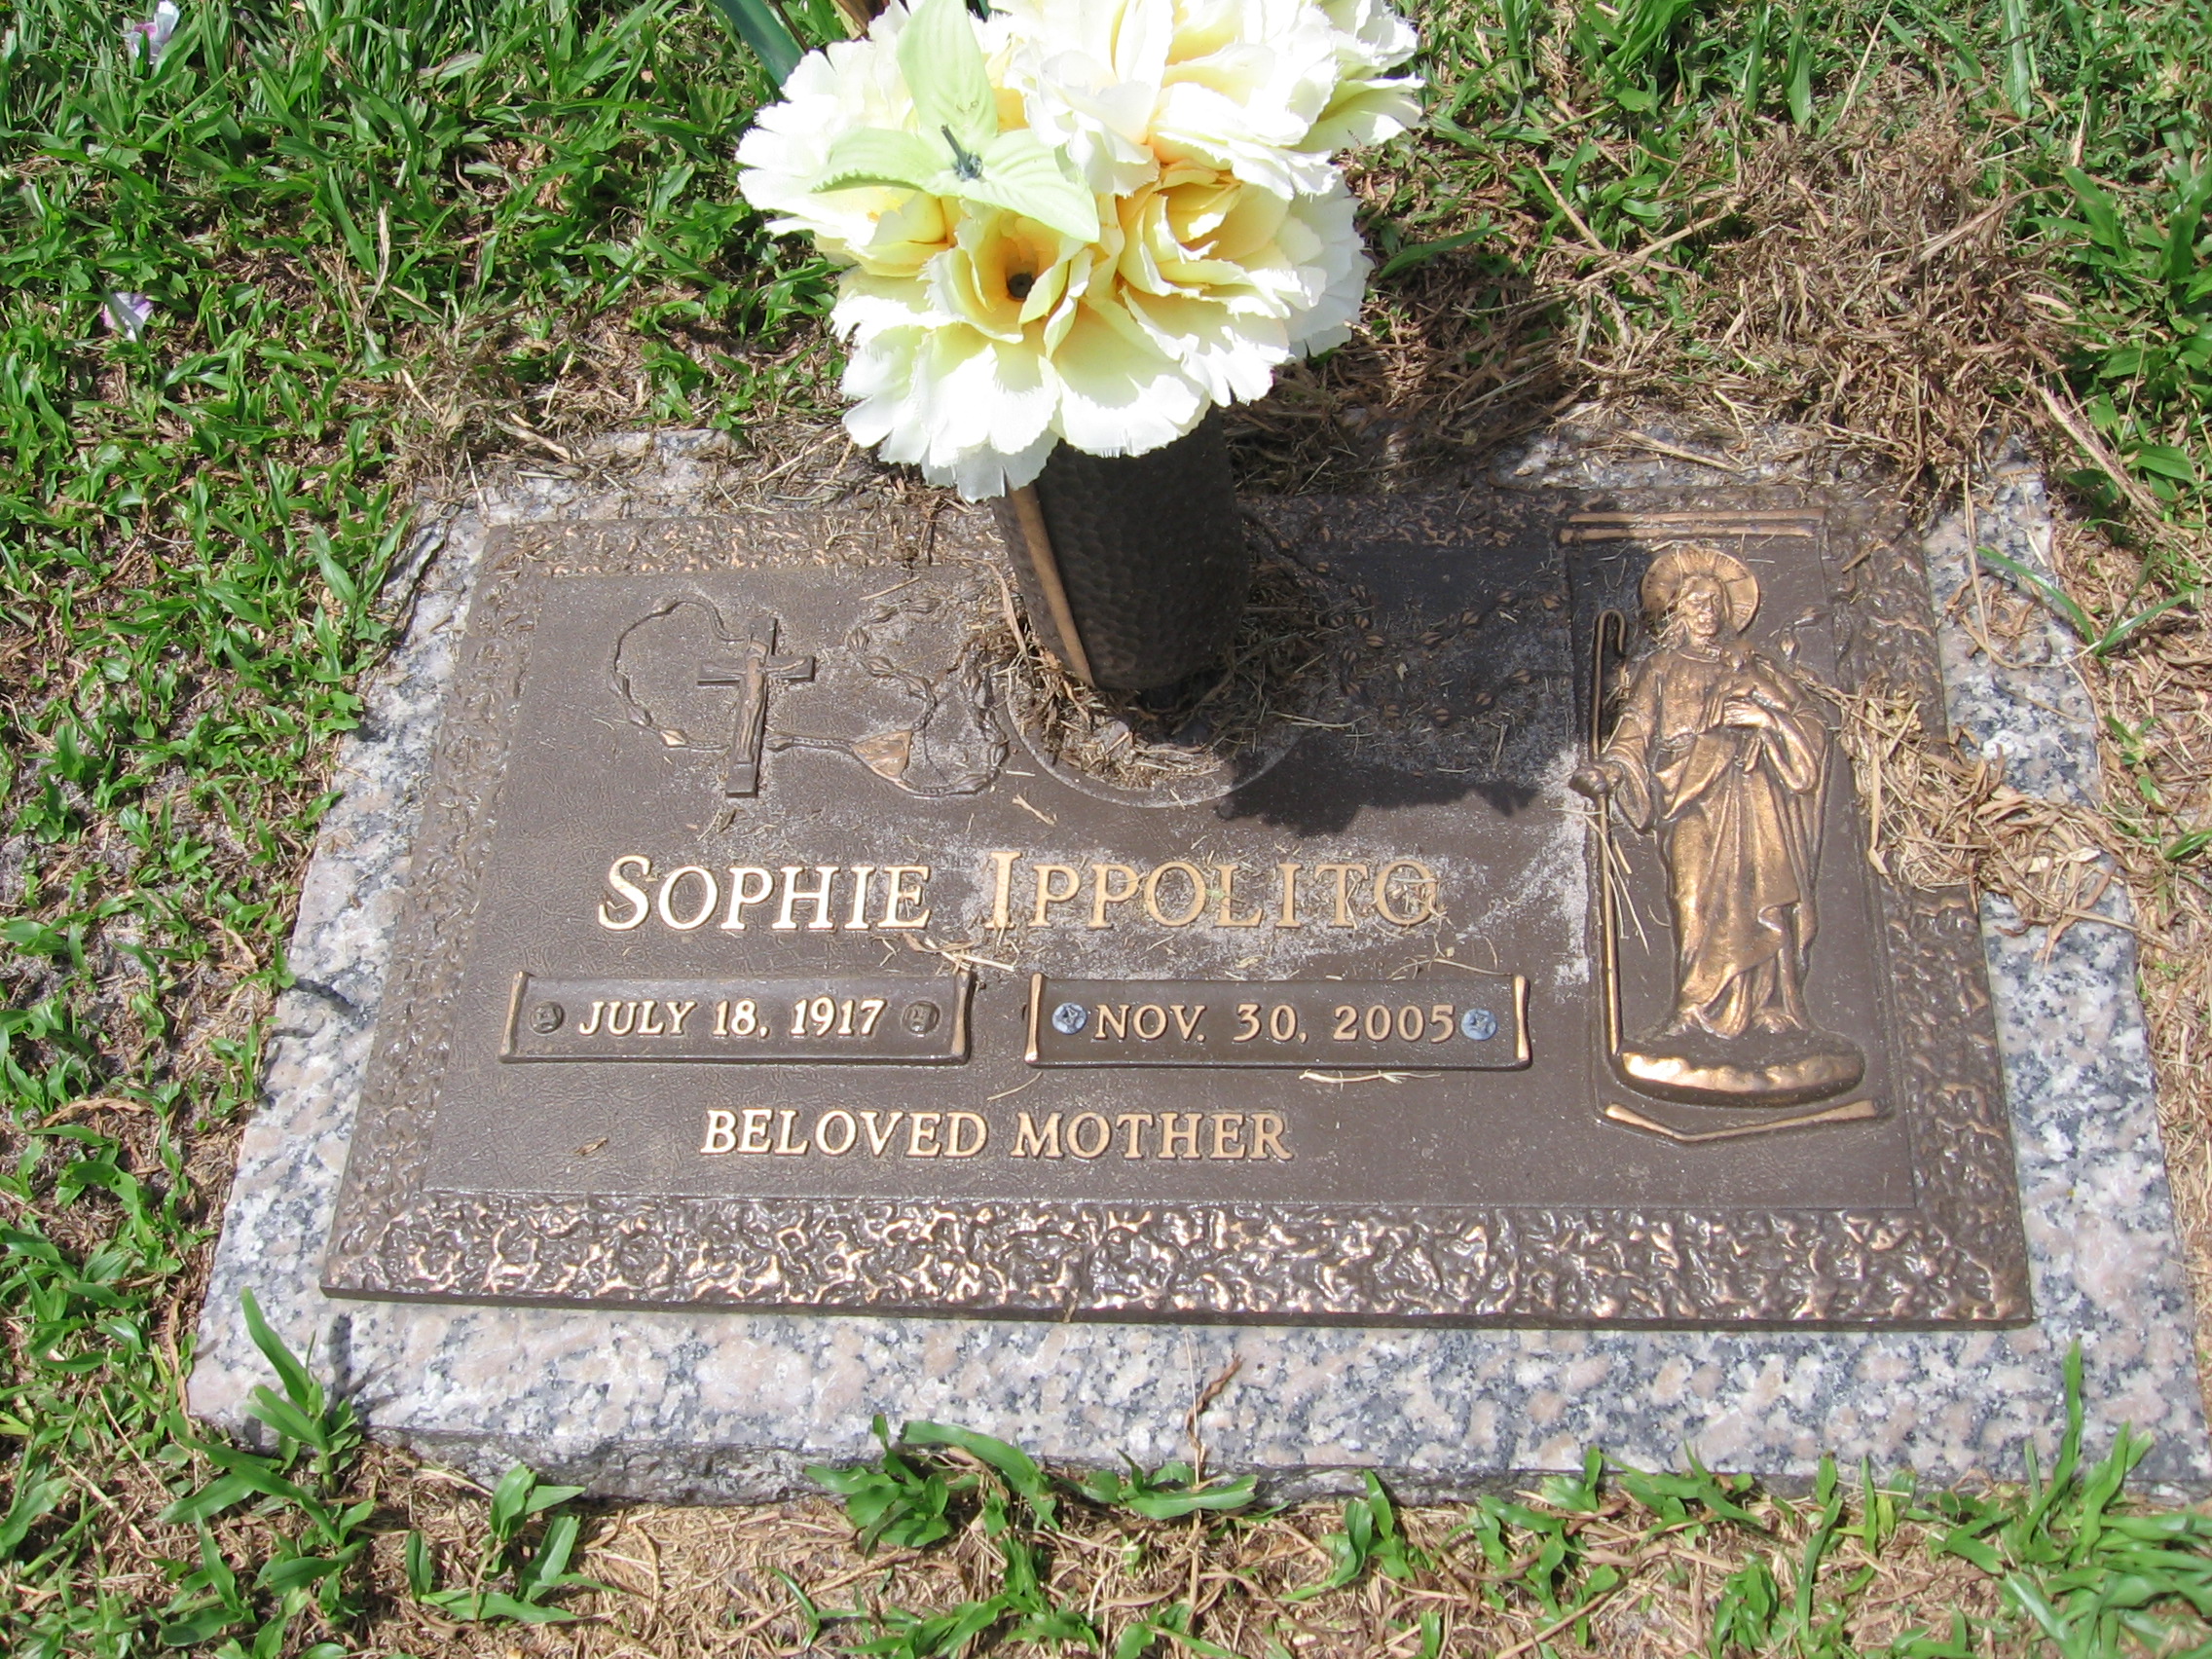 Sophie Ippolito